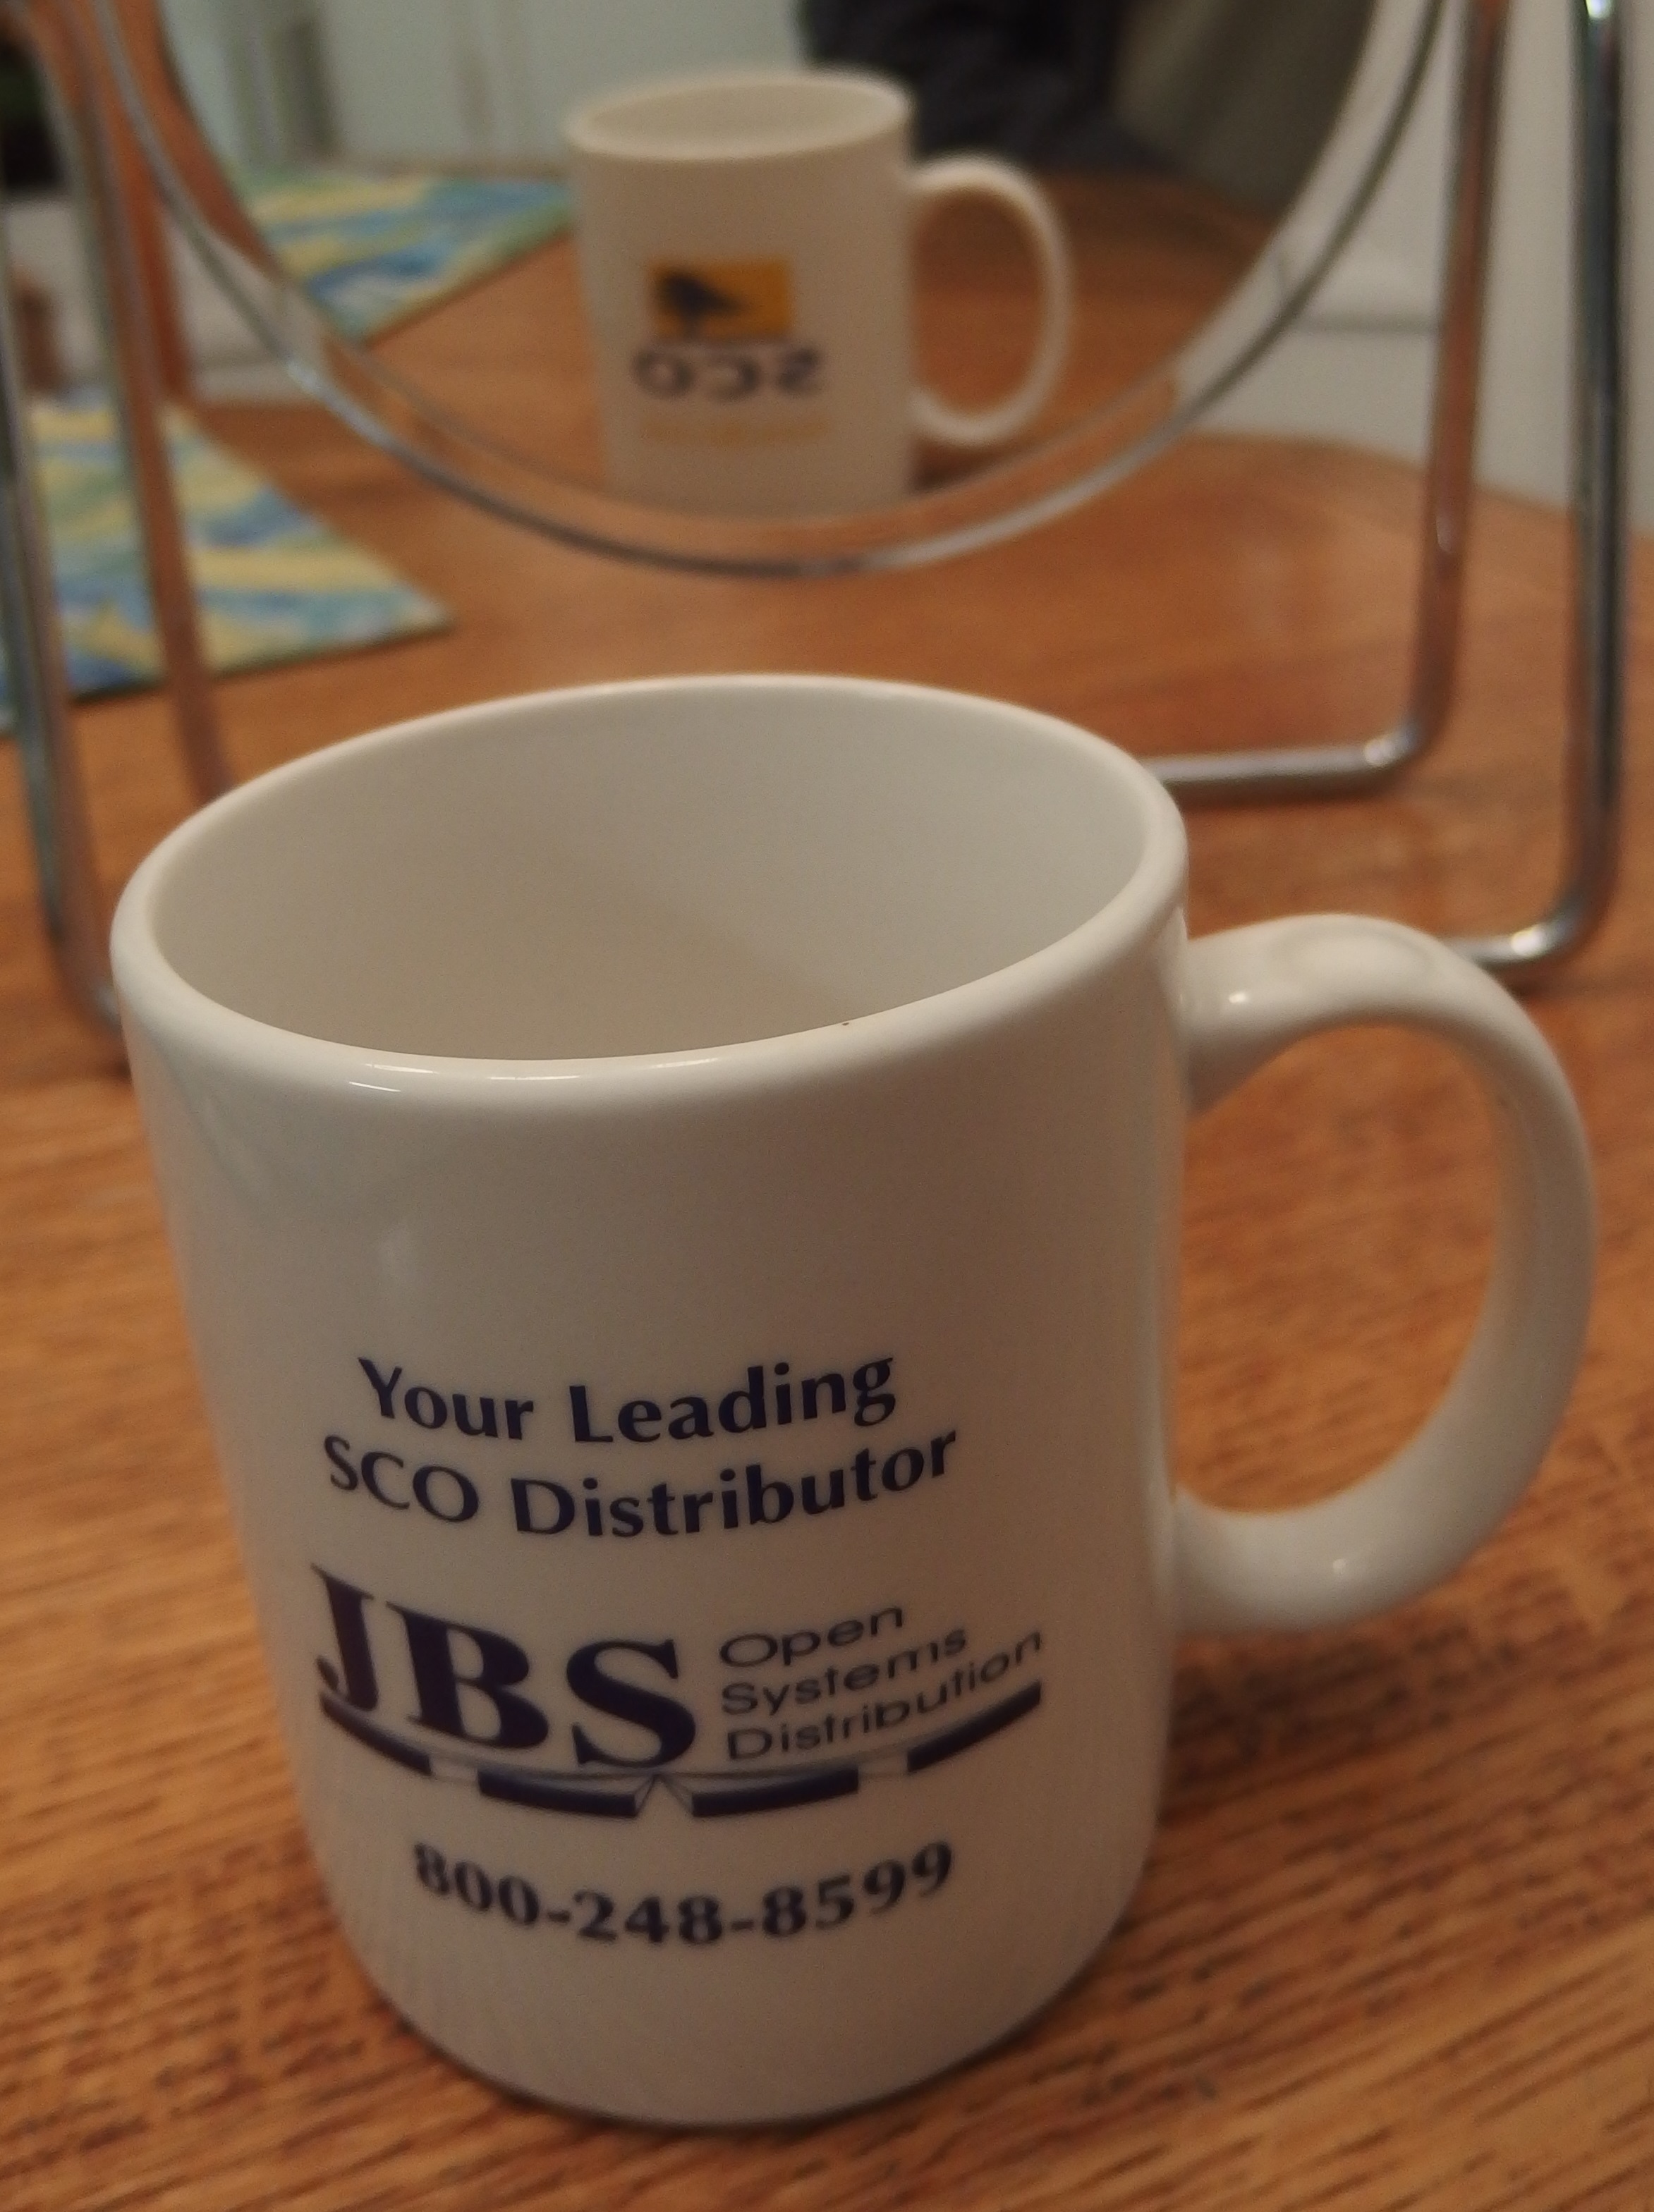 File:JBSi SCO distributor mug.jpg - Wikipedia